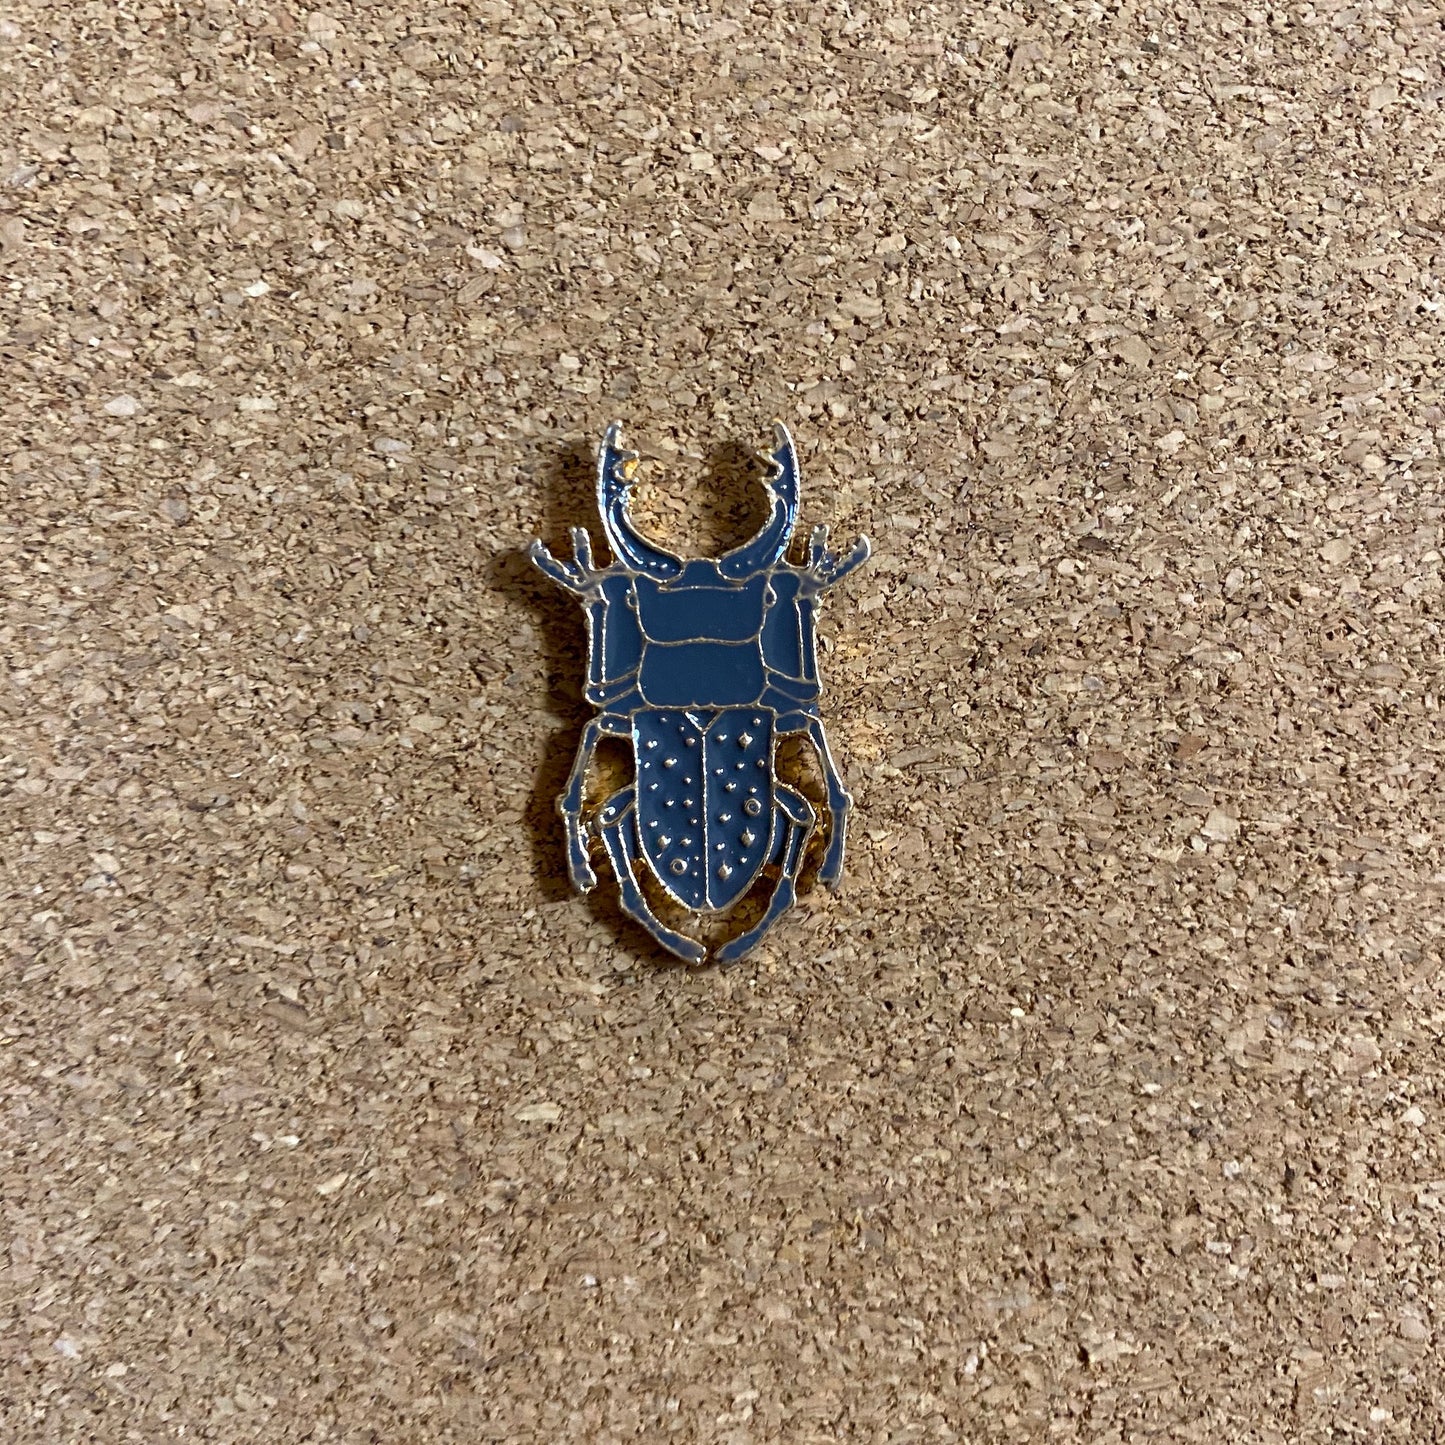 Scarab Beetle Egyptian Enamel Pin - thehappypin